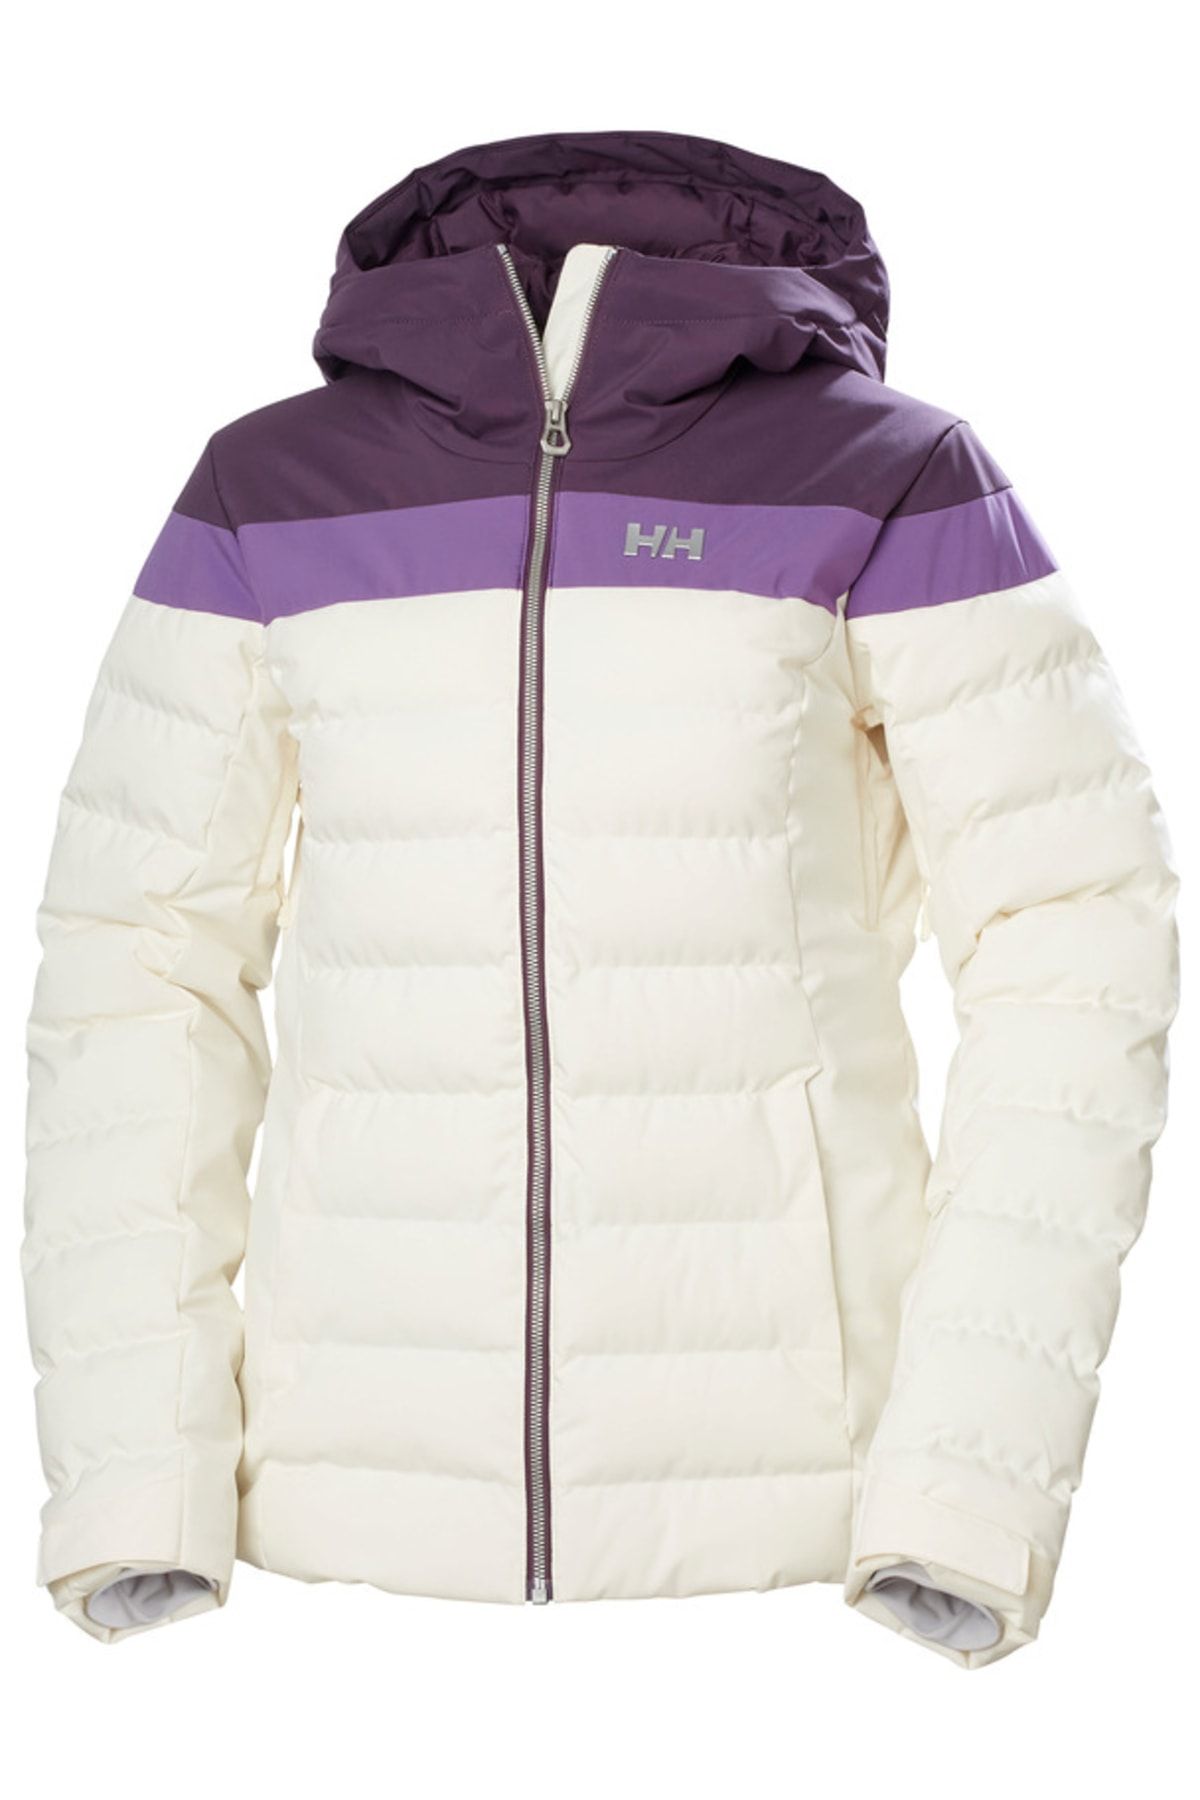 Helly Hansen Hh W Imperıal Puffy Jacket - Kadın Kayak ve Snowboard Montu